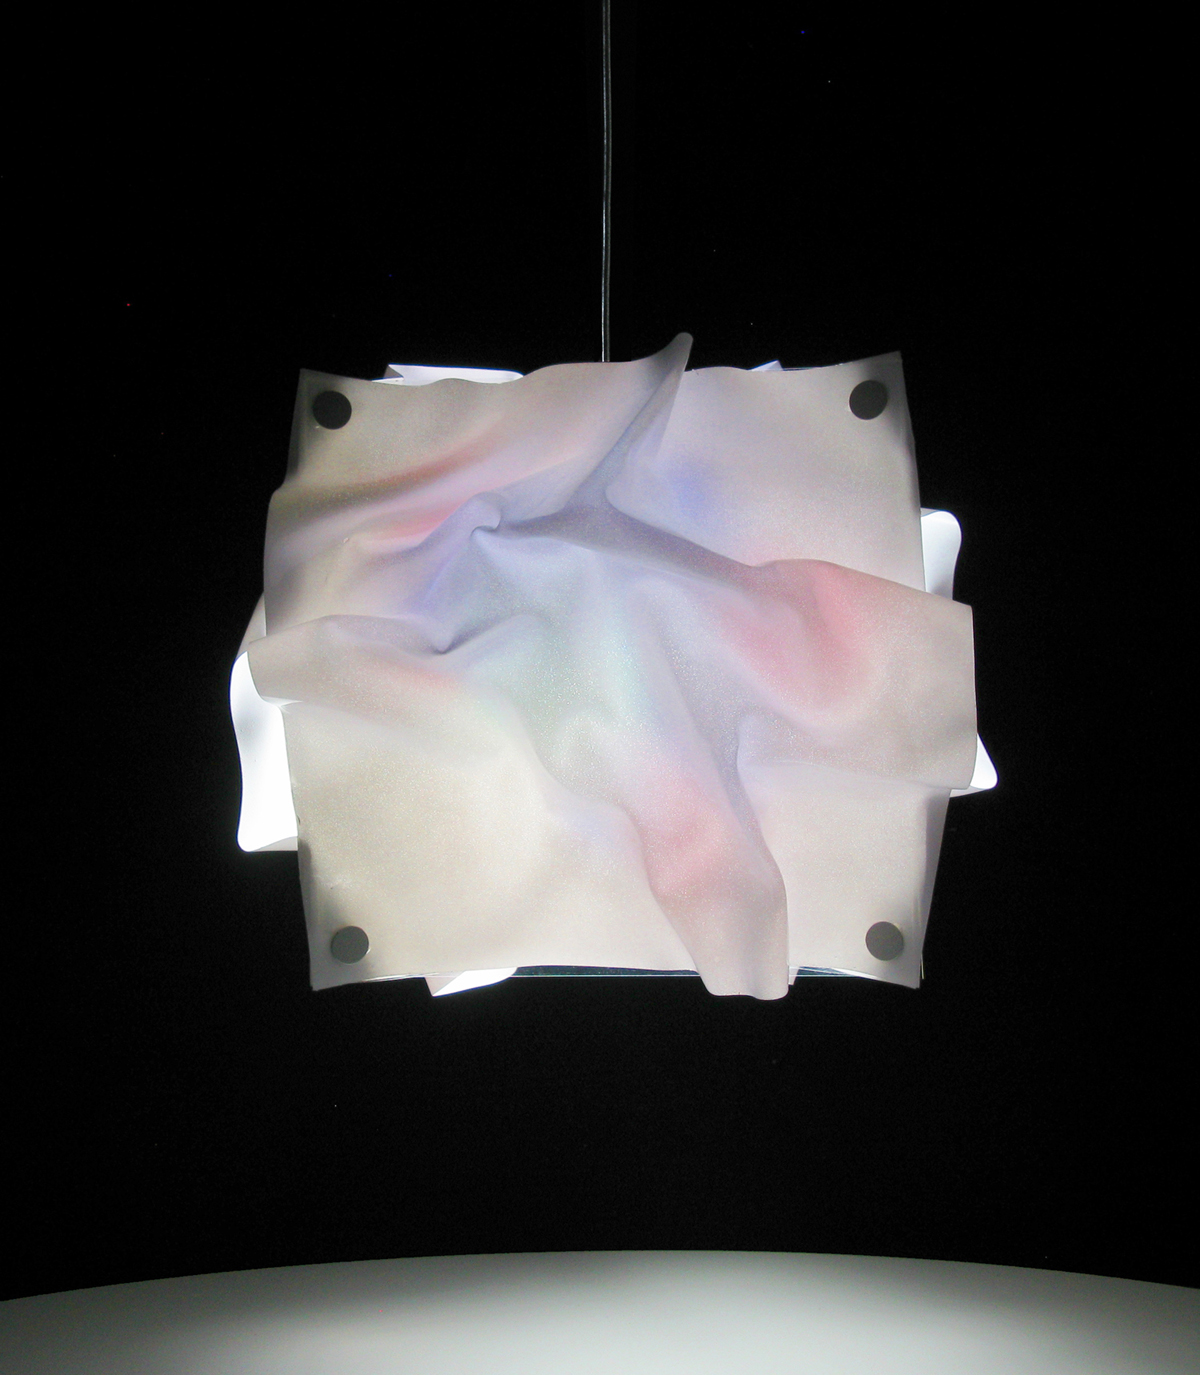 Blurred Lamp by Taeg Nishimoto